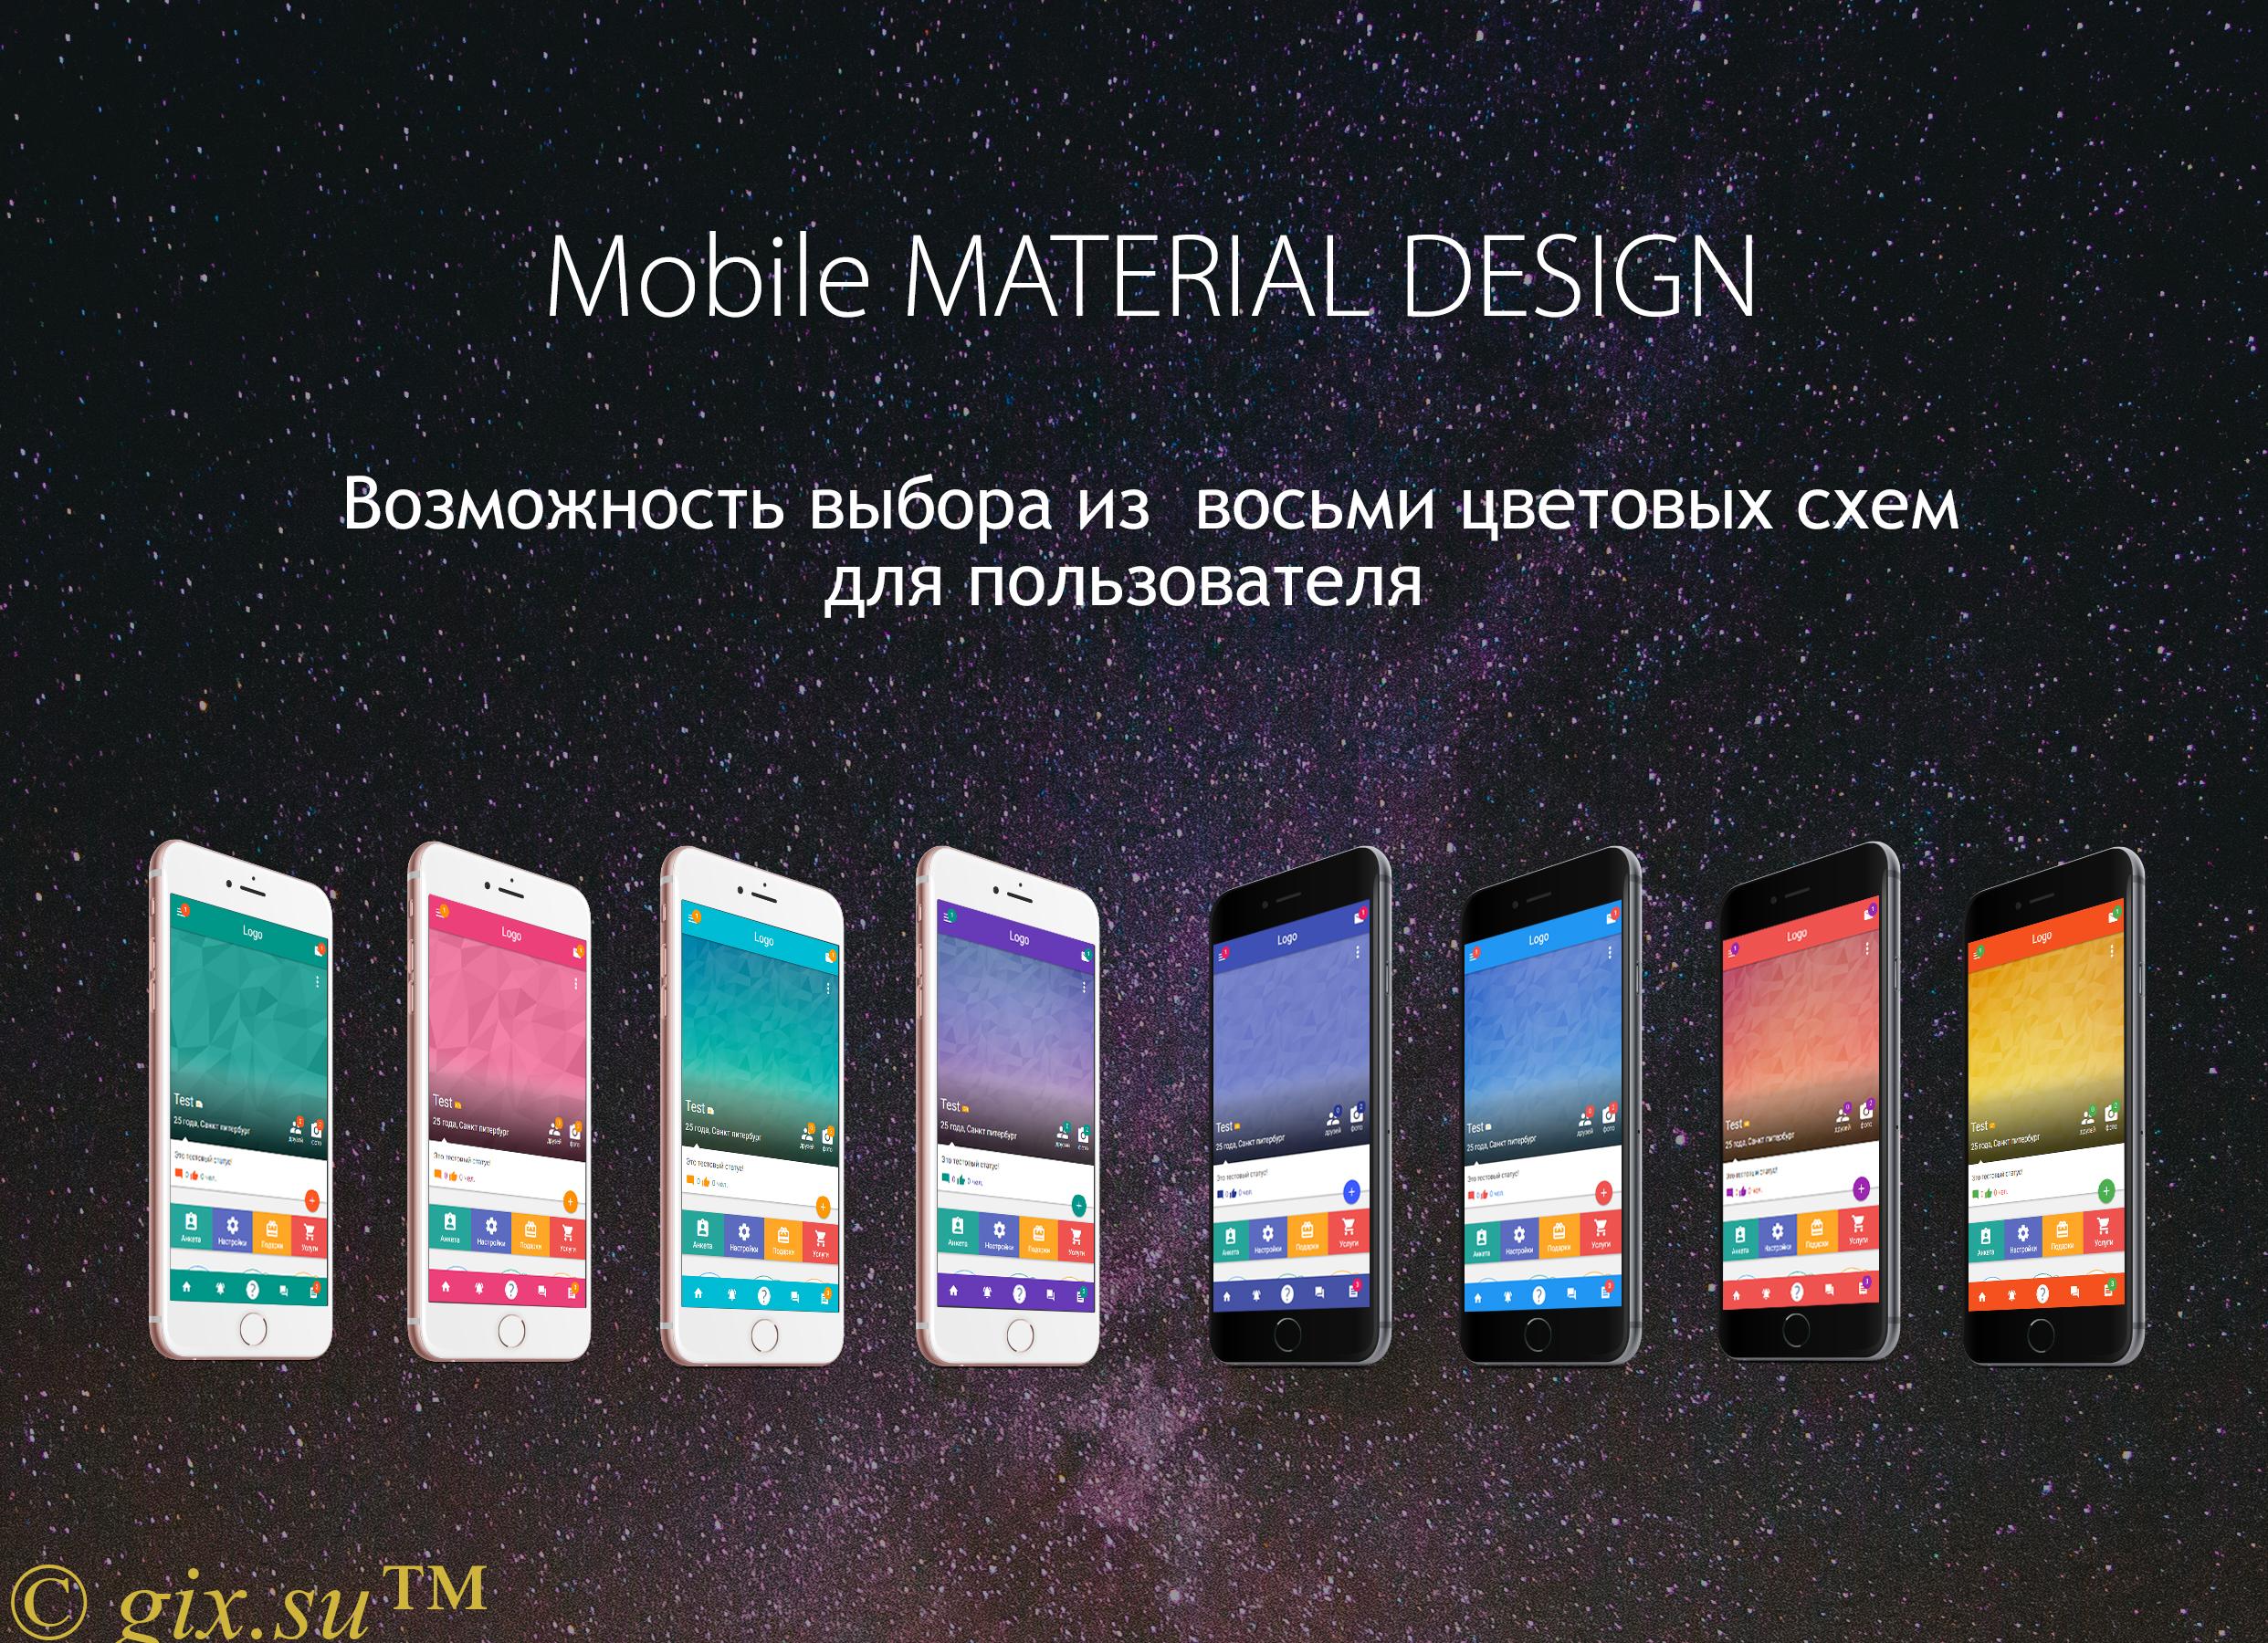 Gix.su - Mobile Material design